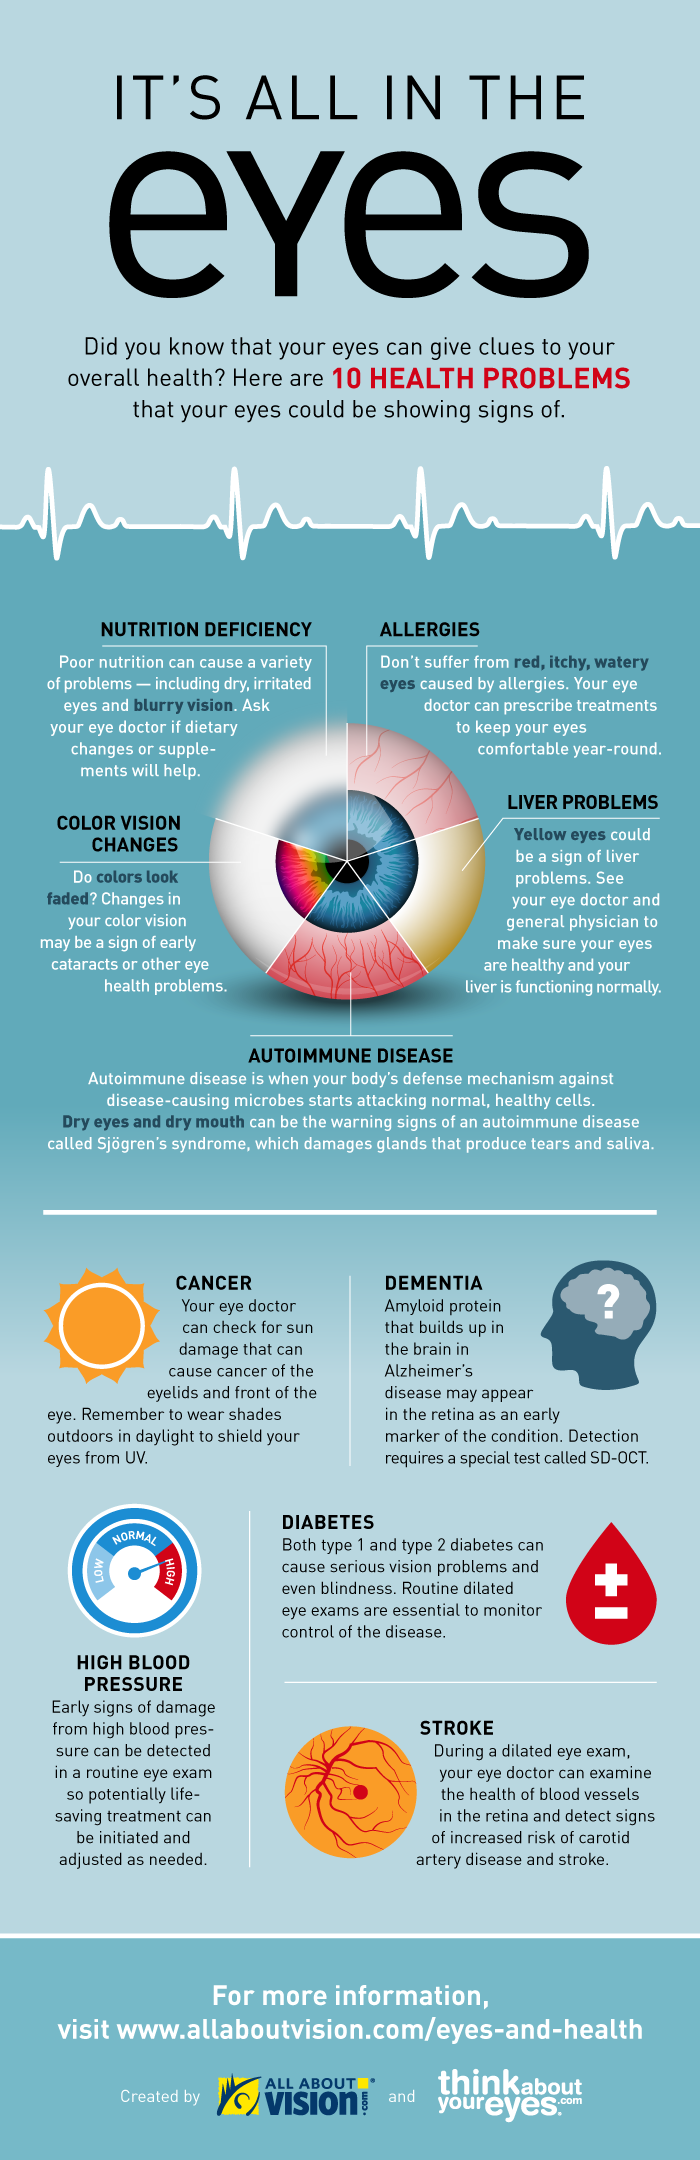 Importance of Eye exams